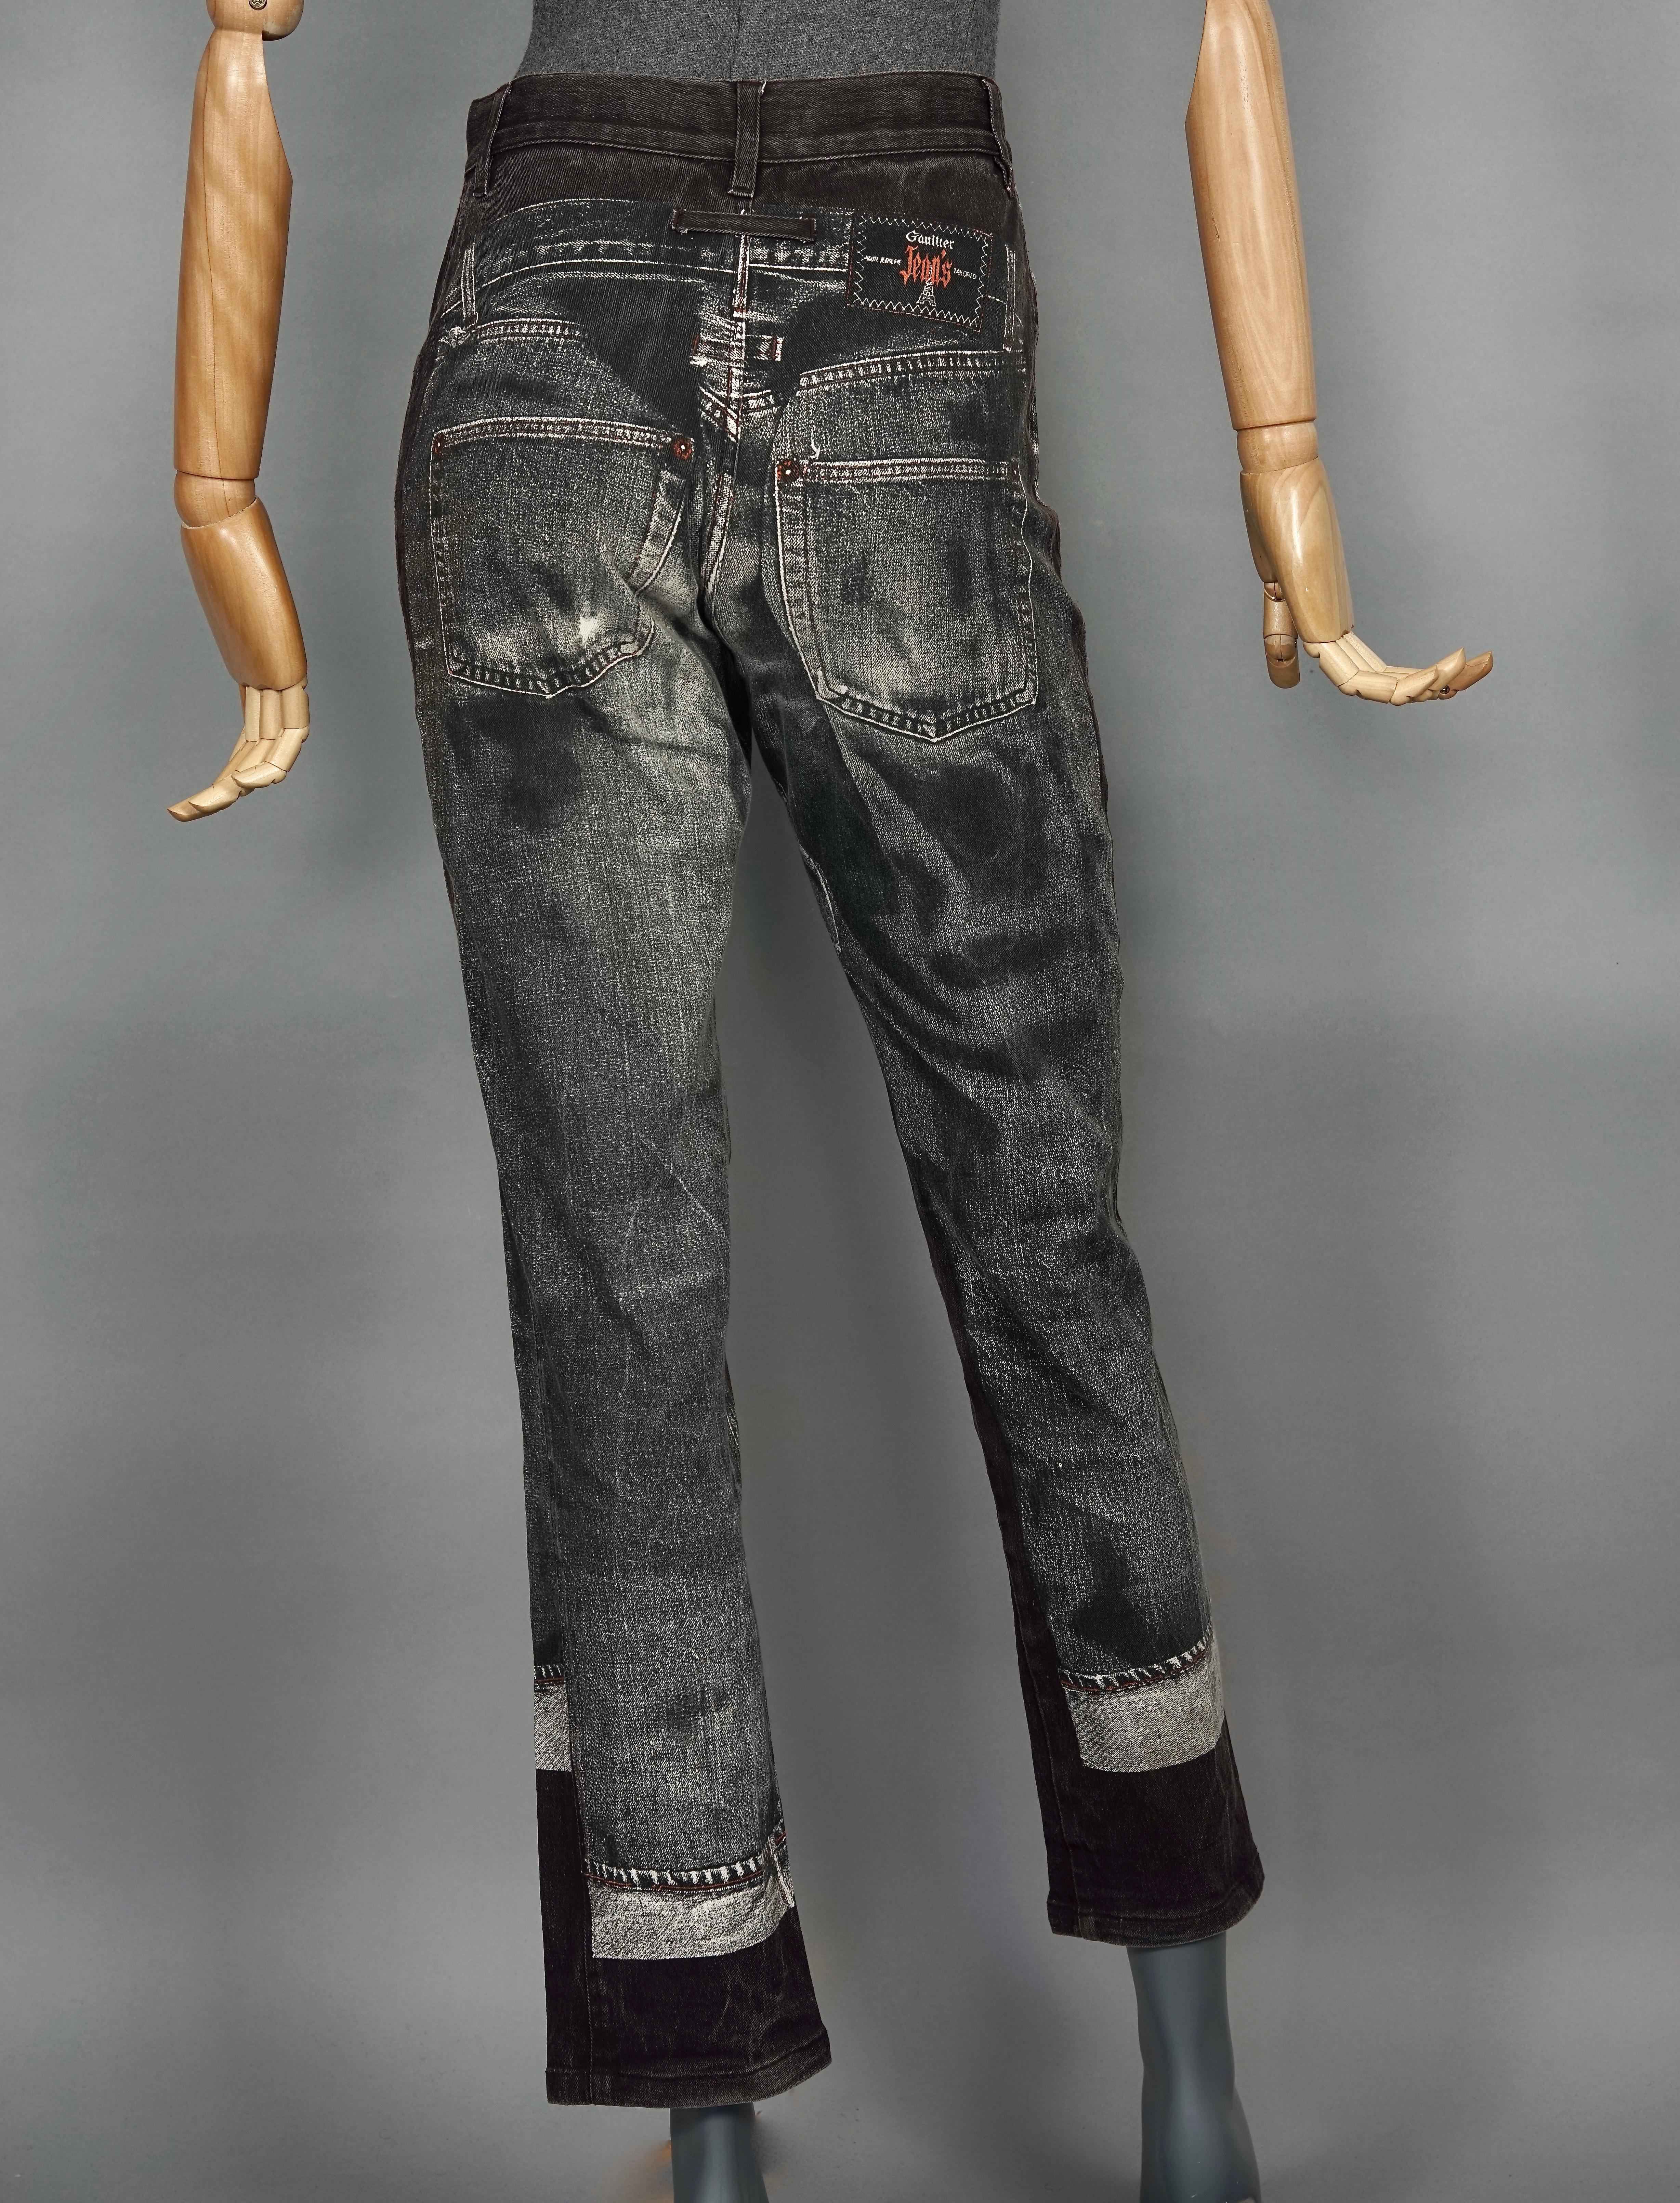 jean paul gaultier vintage jeans